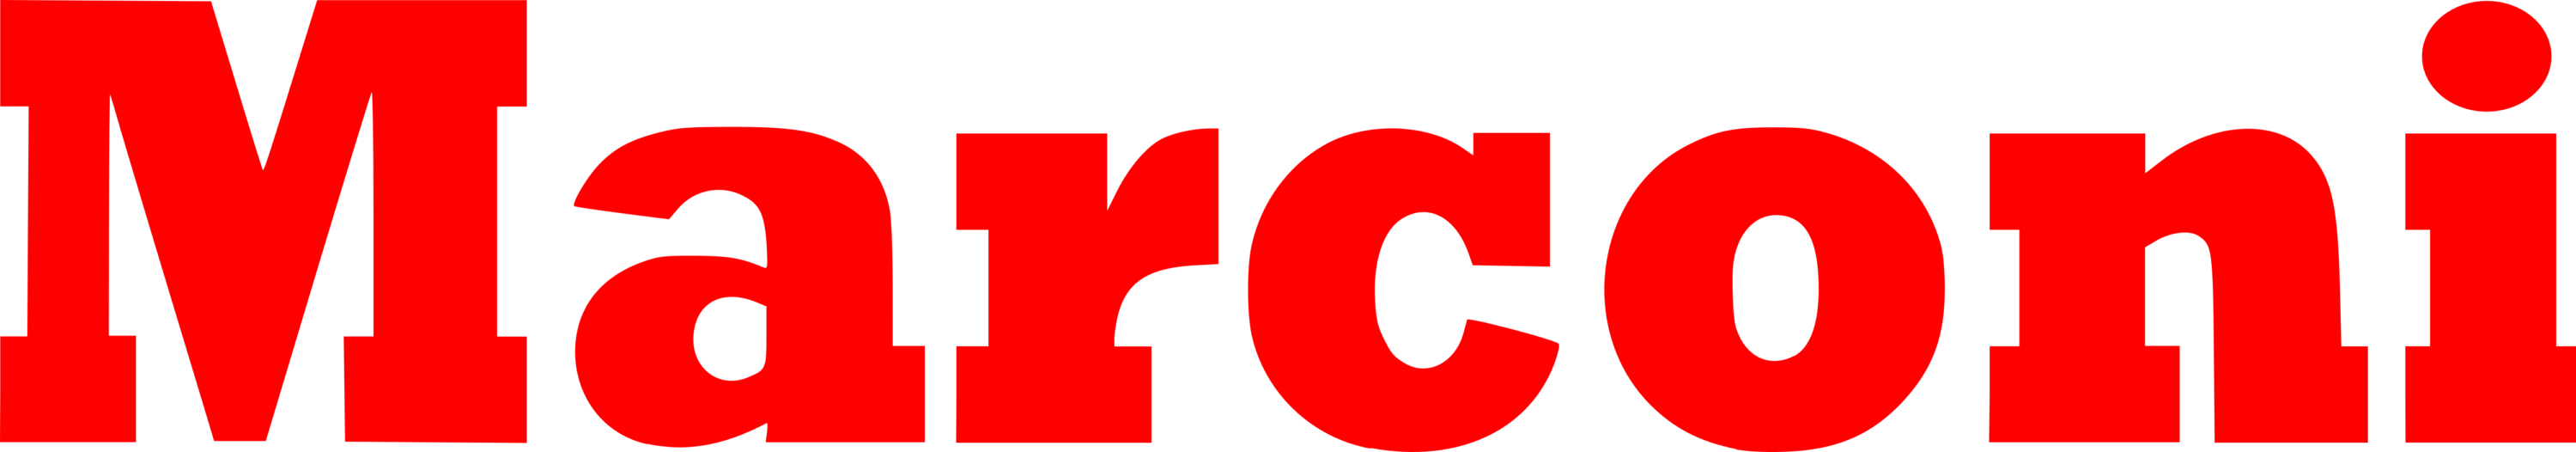 GEC Marconi Logo